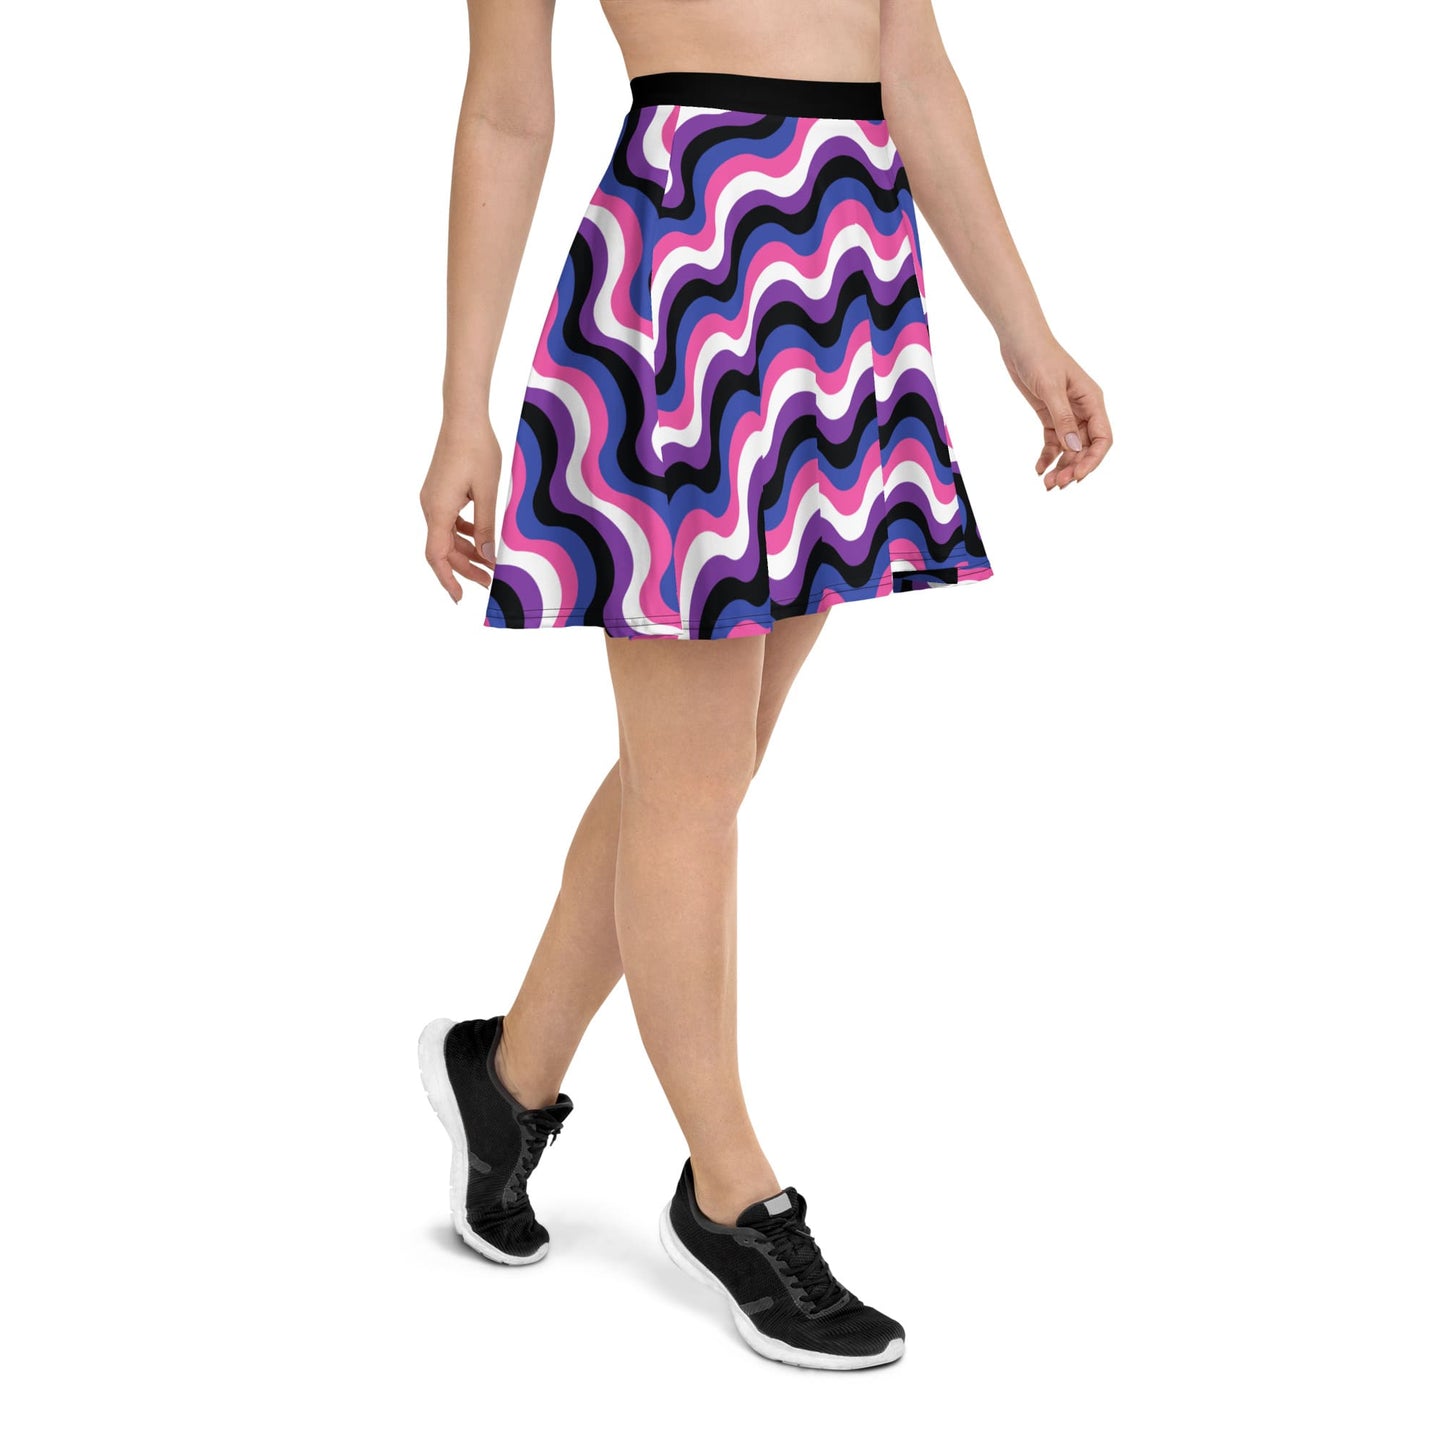 genderfluid skirt, right